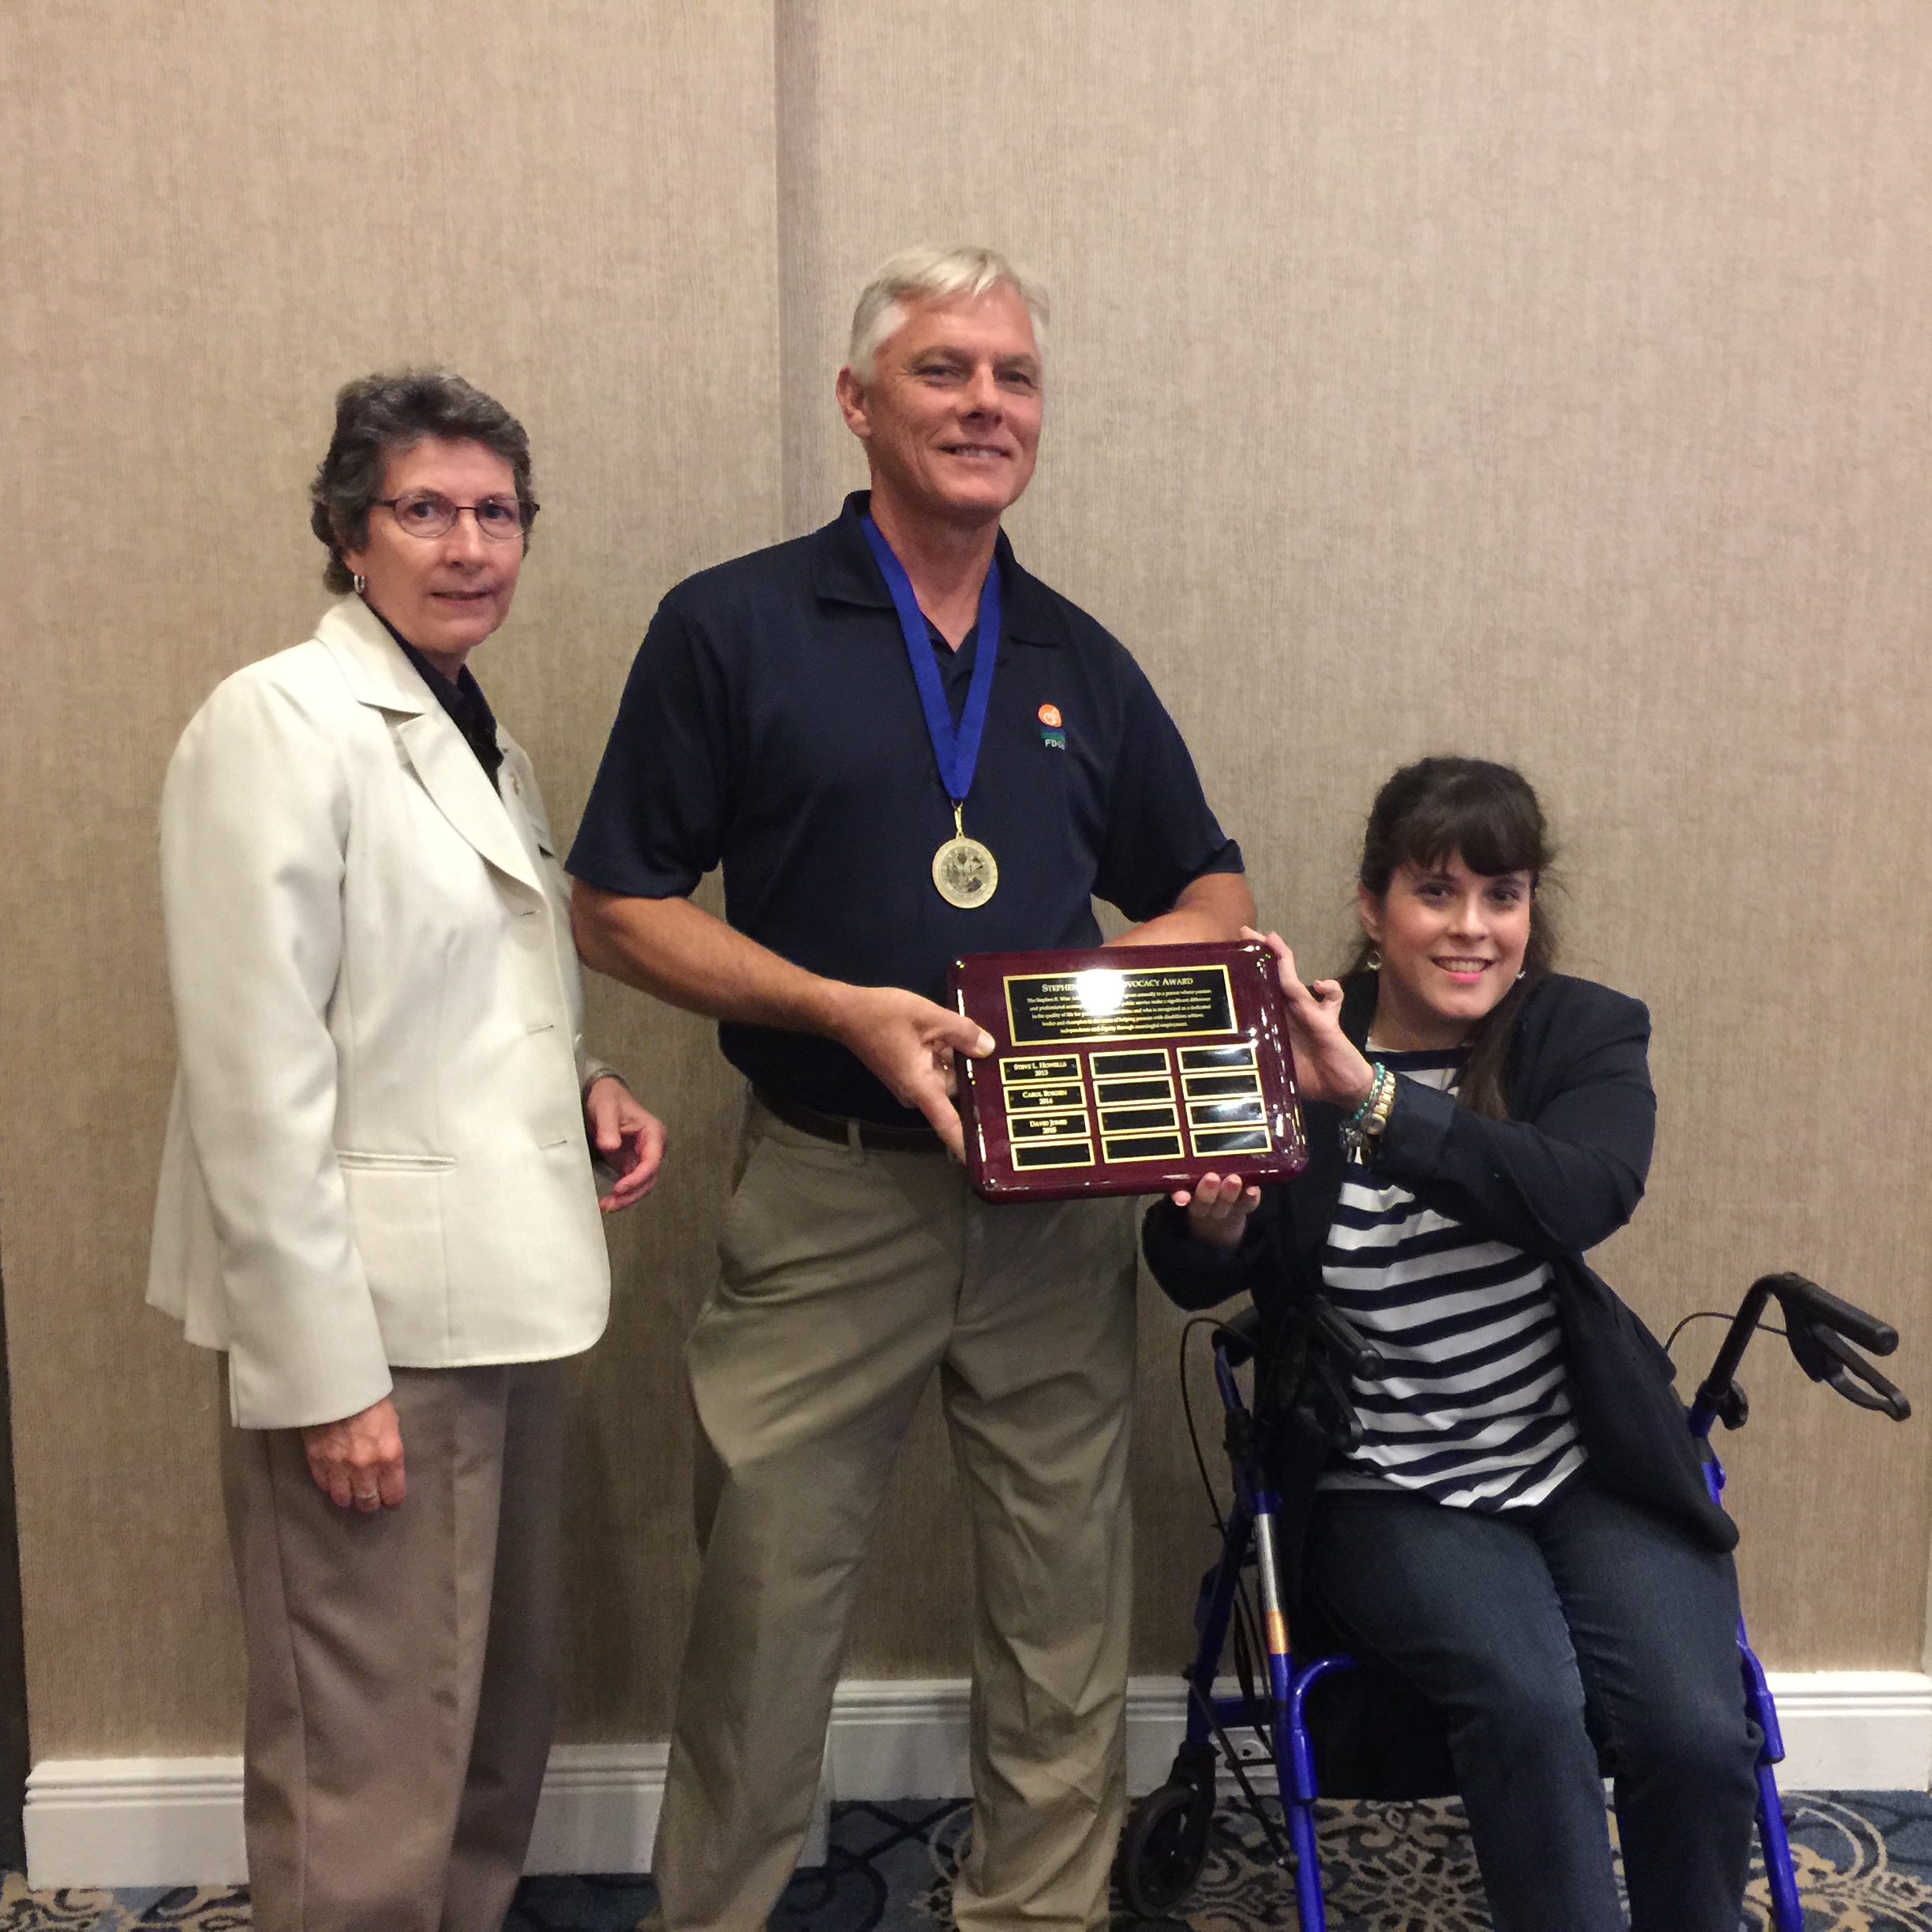 David Jones receiving the Stephen R. Wise Advocacy Award